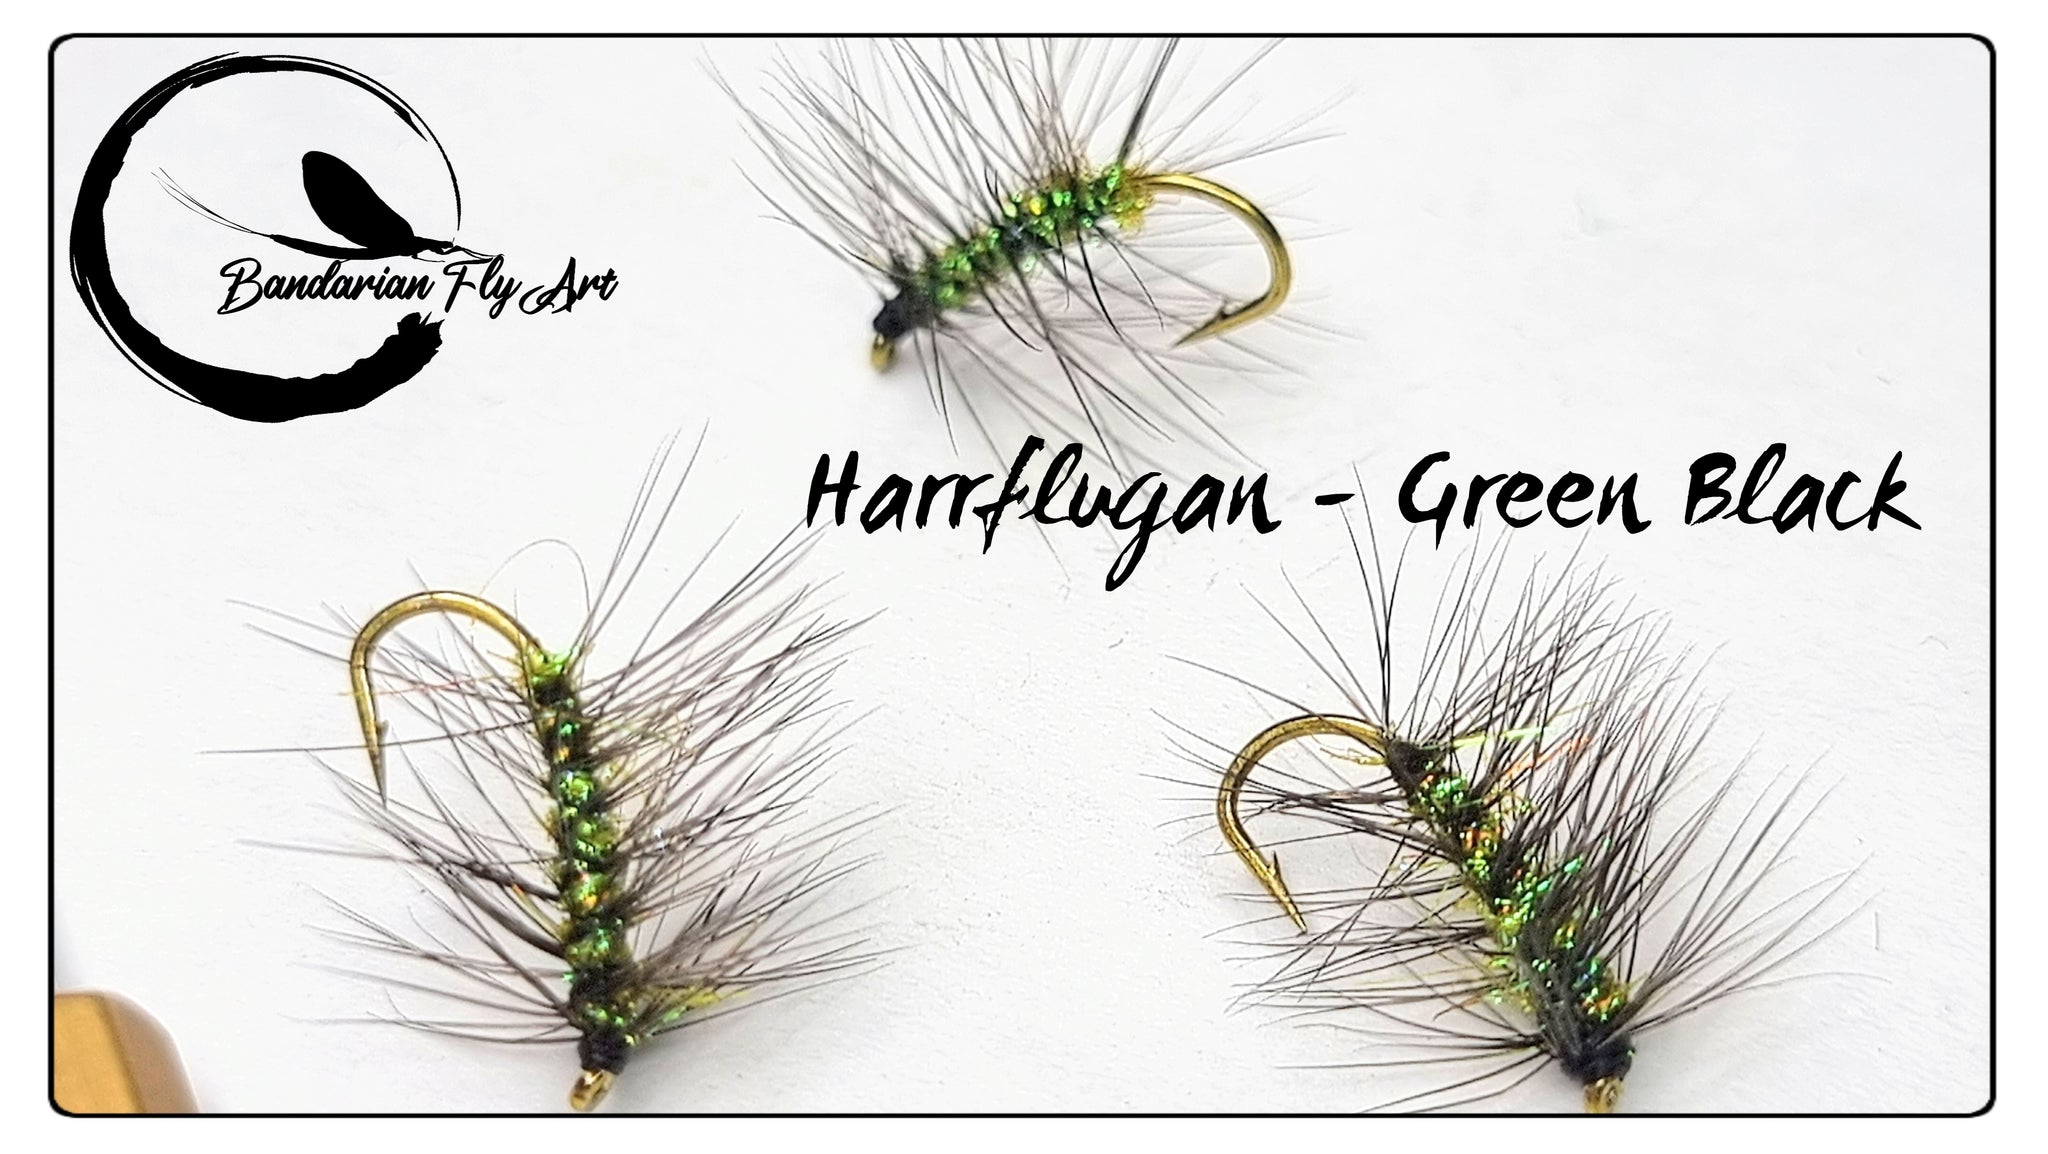 Harrflugan - Green Black